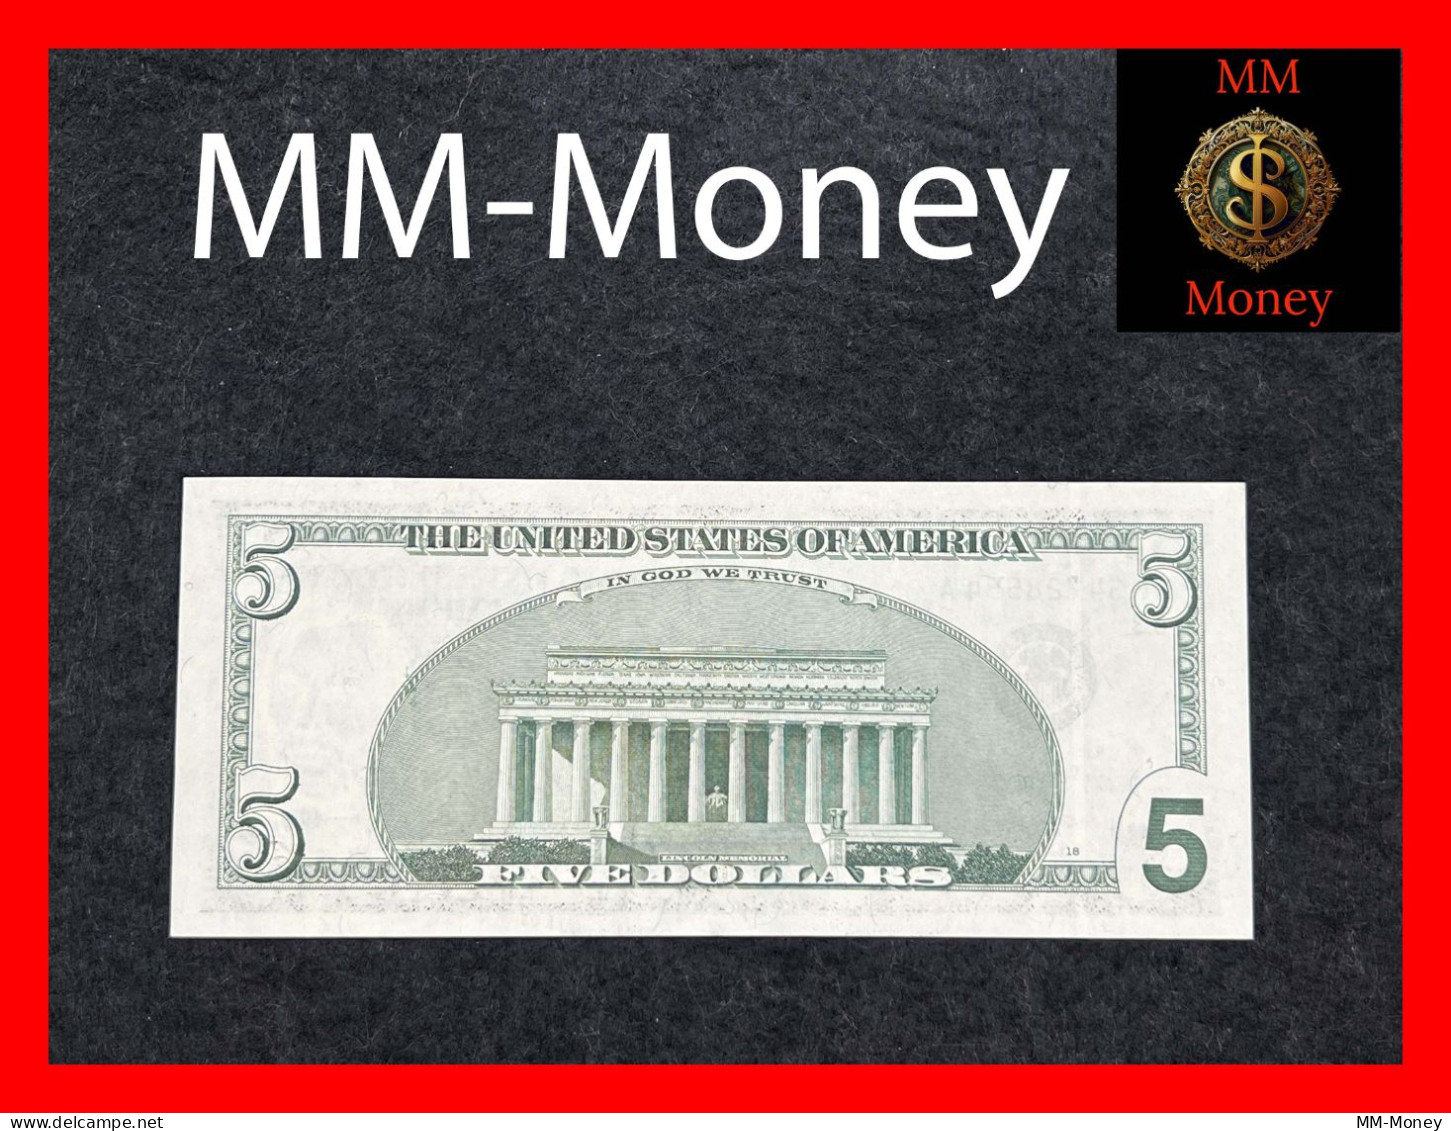 U.S.A.  USA  United States  5 $  2003   P. 517  *C 3 Philadelphia PA*   UNC - Federal Reserve (1928-...)